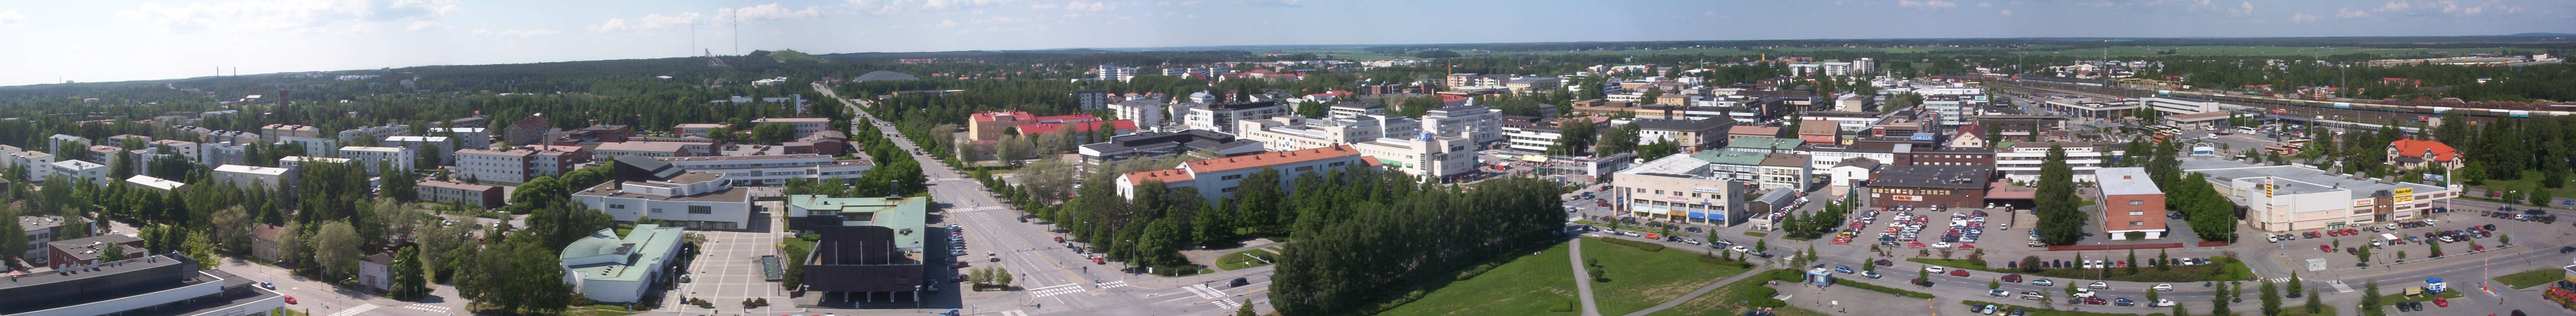 Seinäjoki, from Alvar Aalto tower.jpg